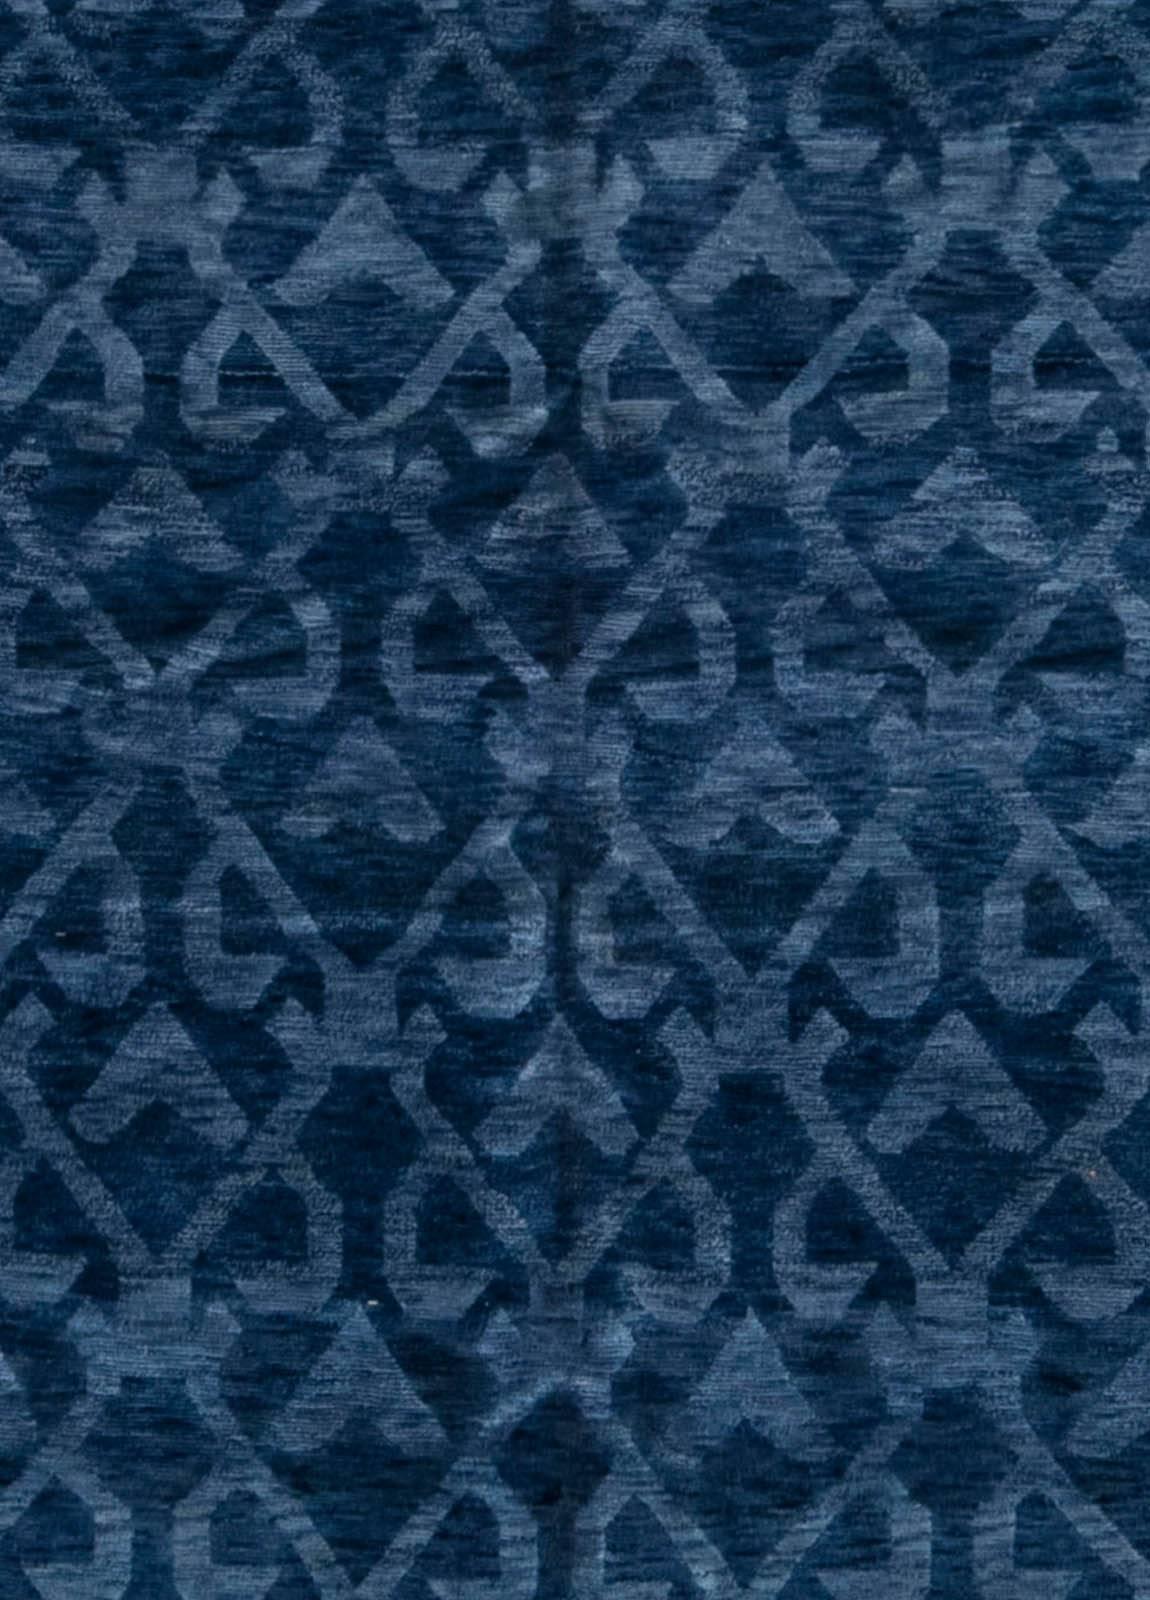 Contemporary navy blue handcrafted Pashmina Euro rug by Doris Leslie Blau
Size: 8'9